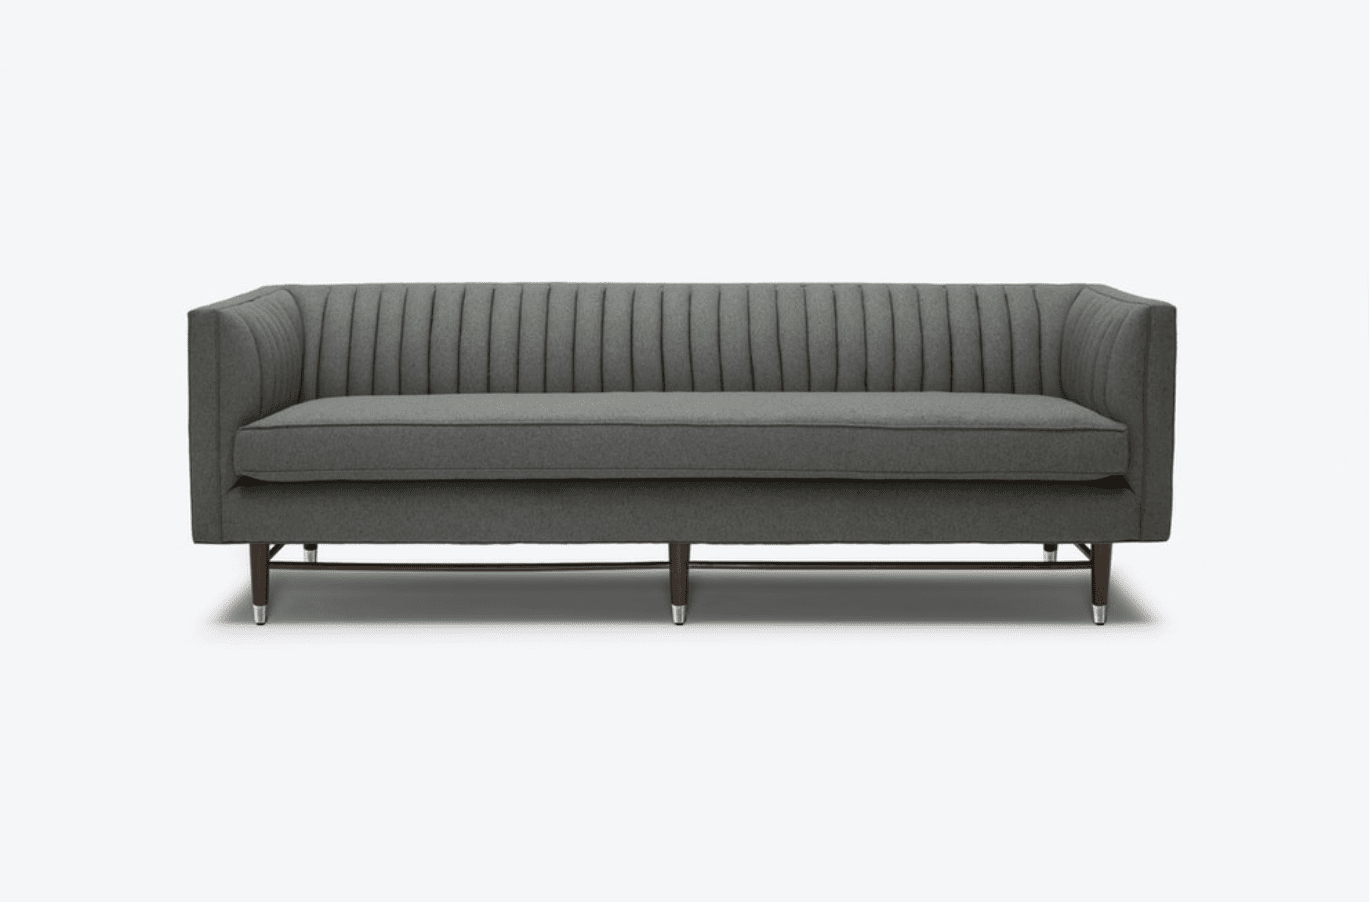 Joybird Gray Sofa with legs and sleek design